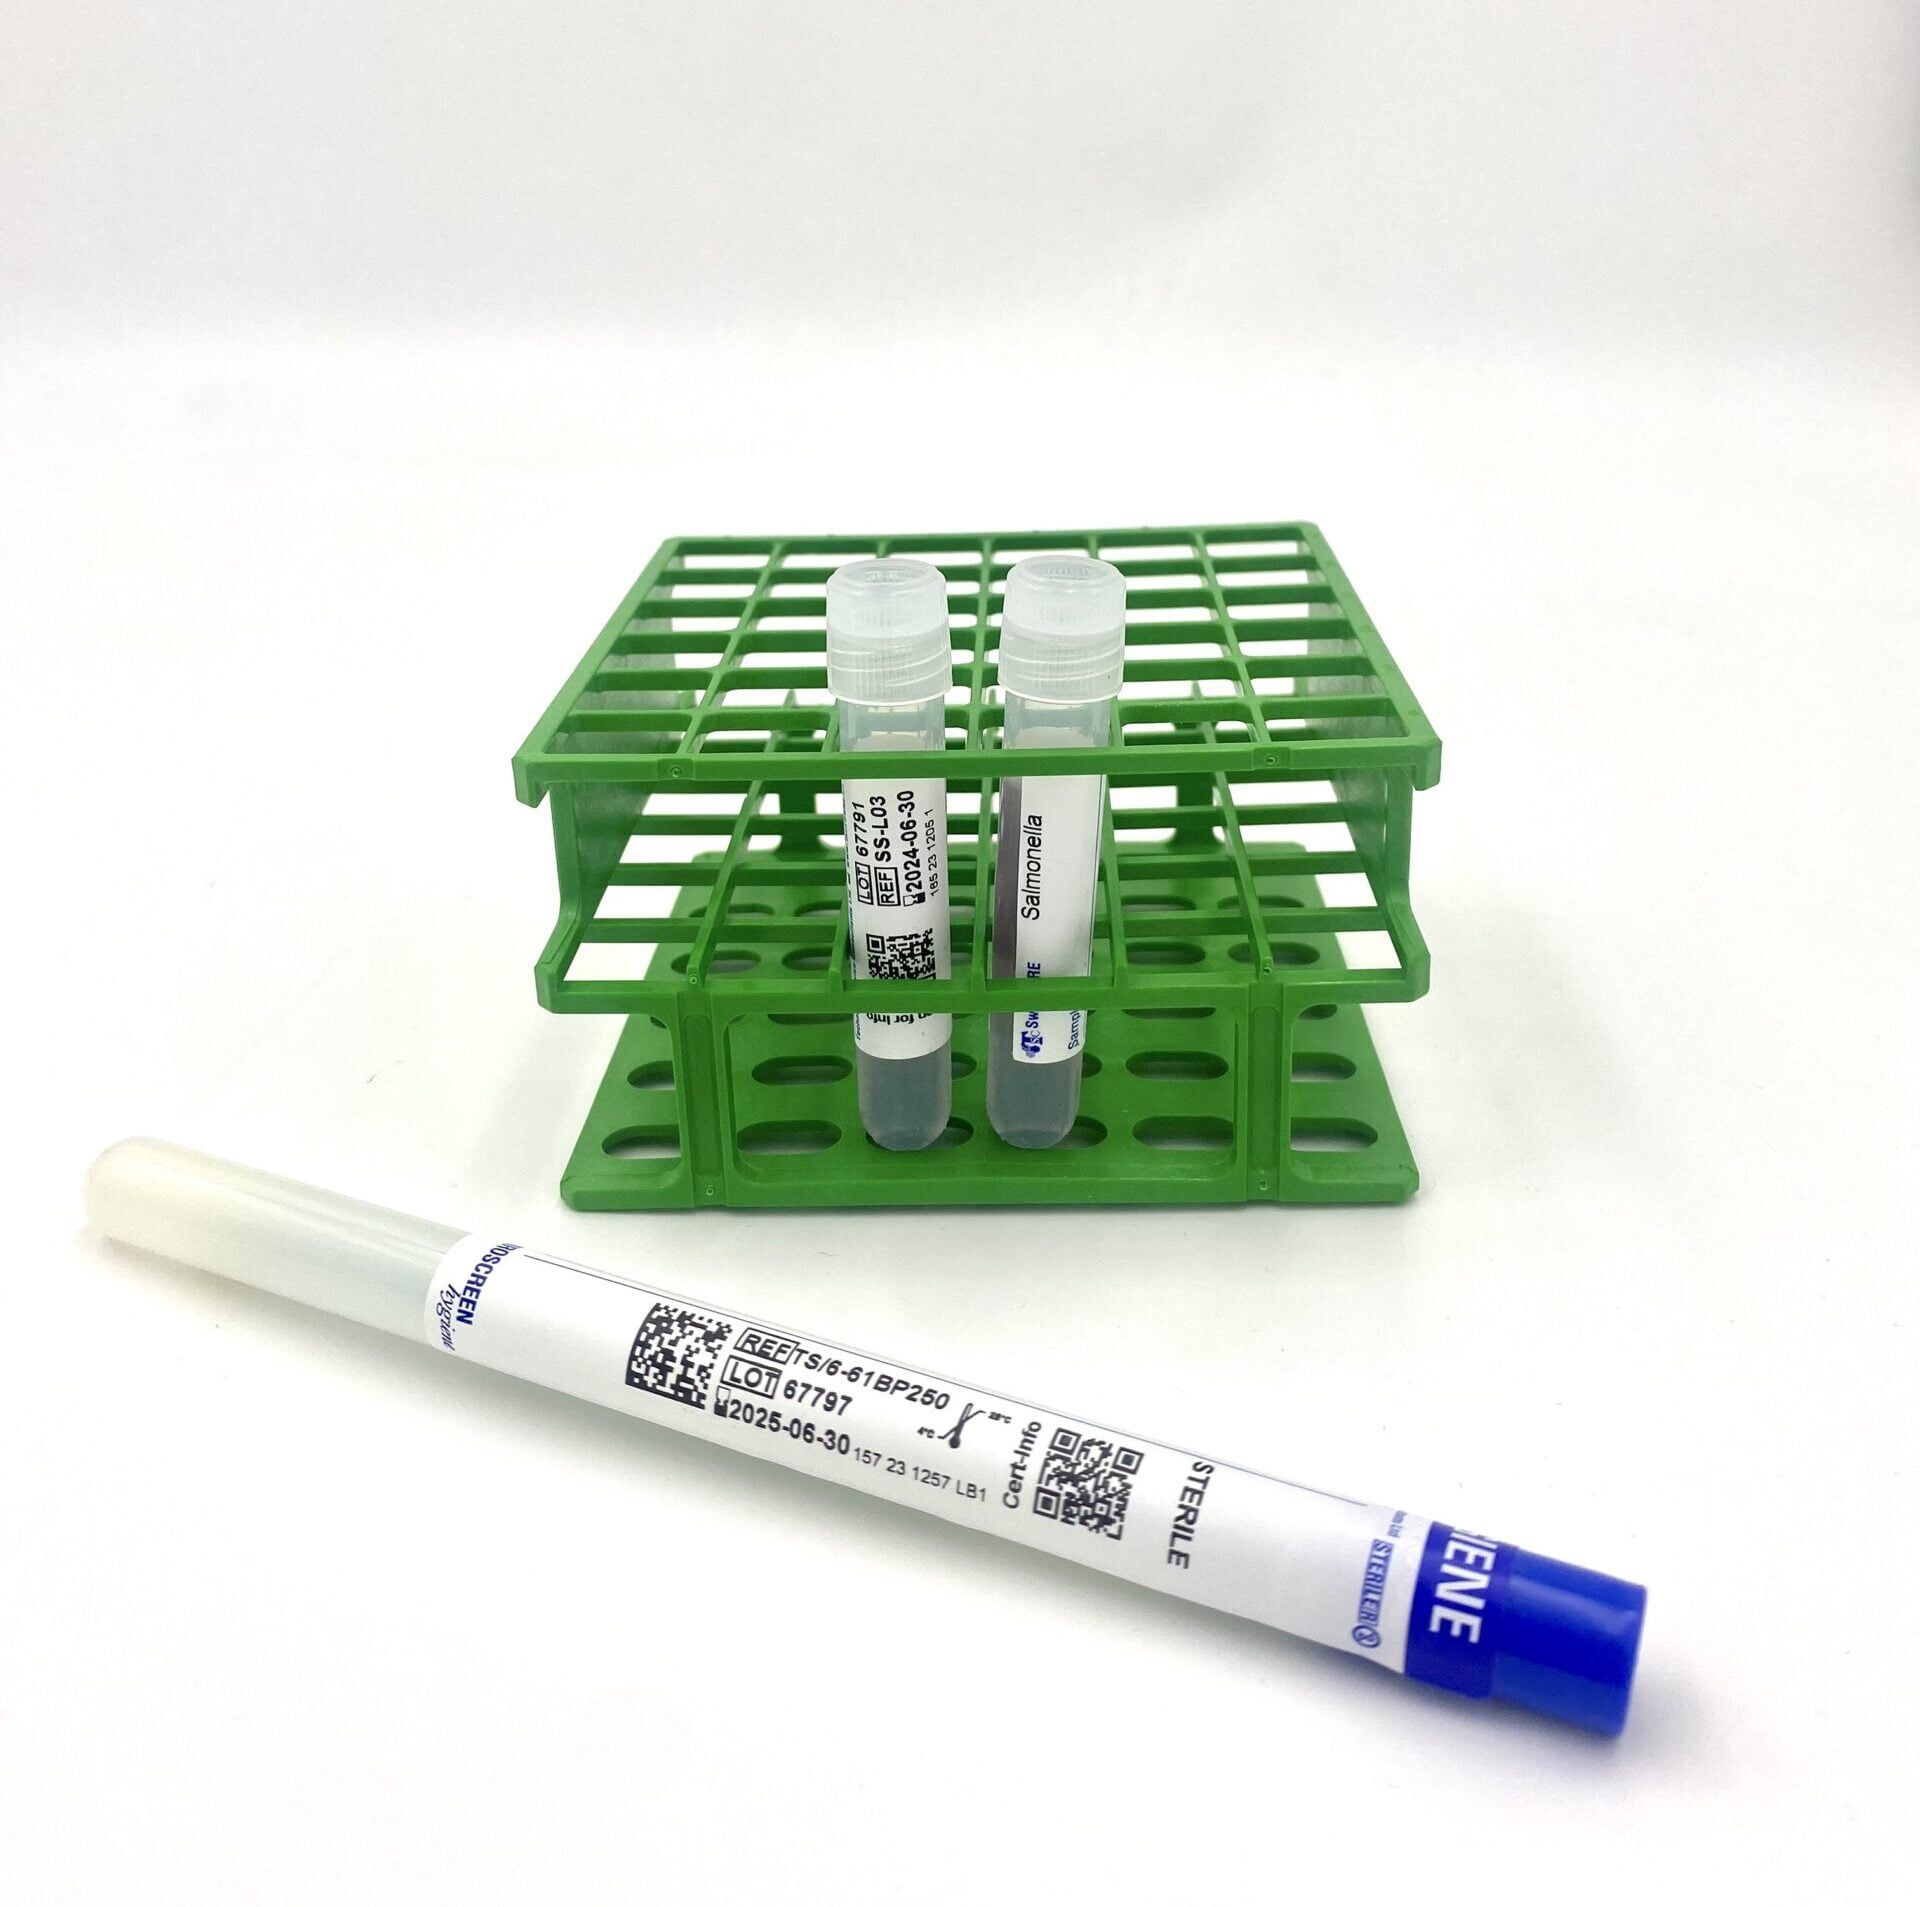 SwabSURE Salmonella Detection Kit